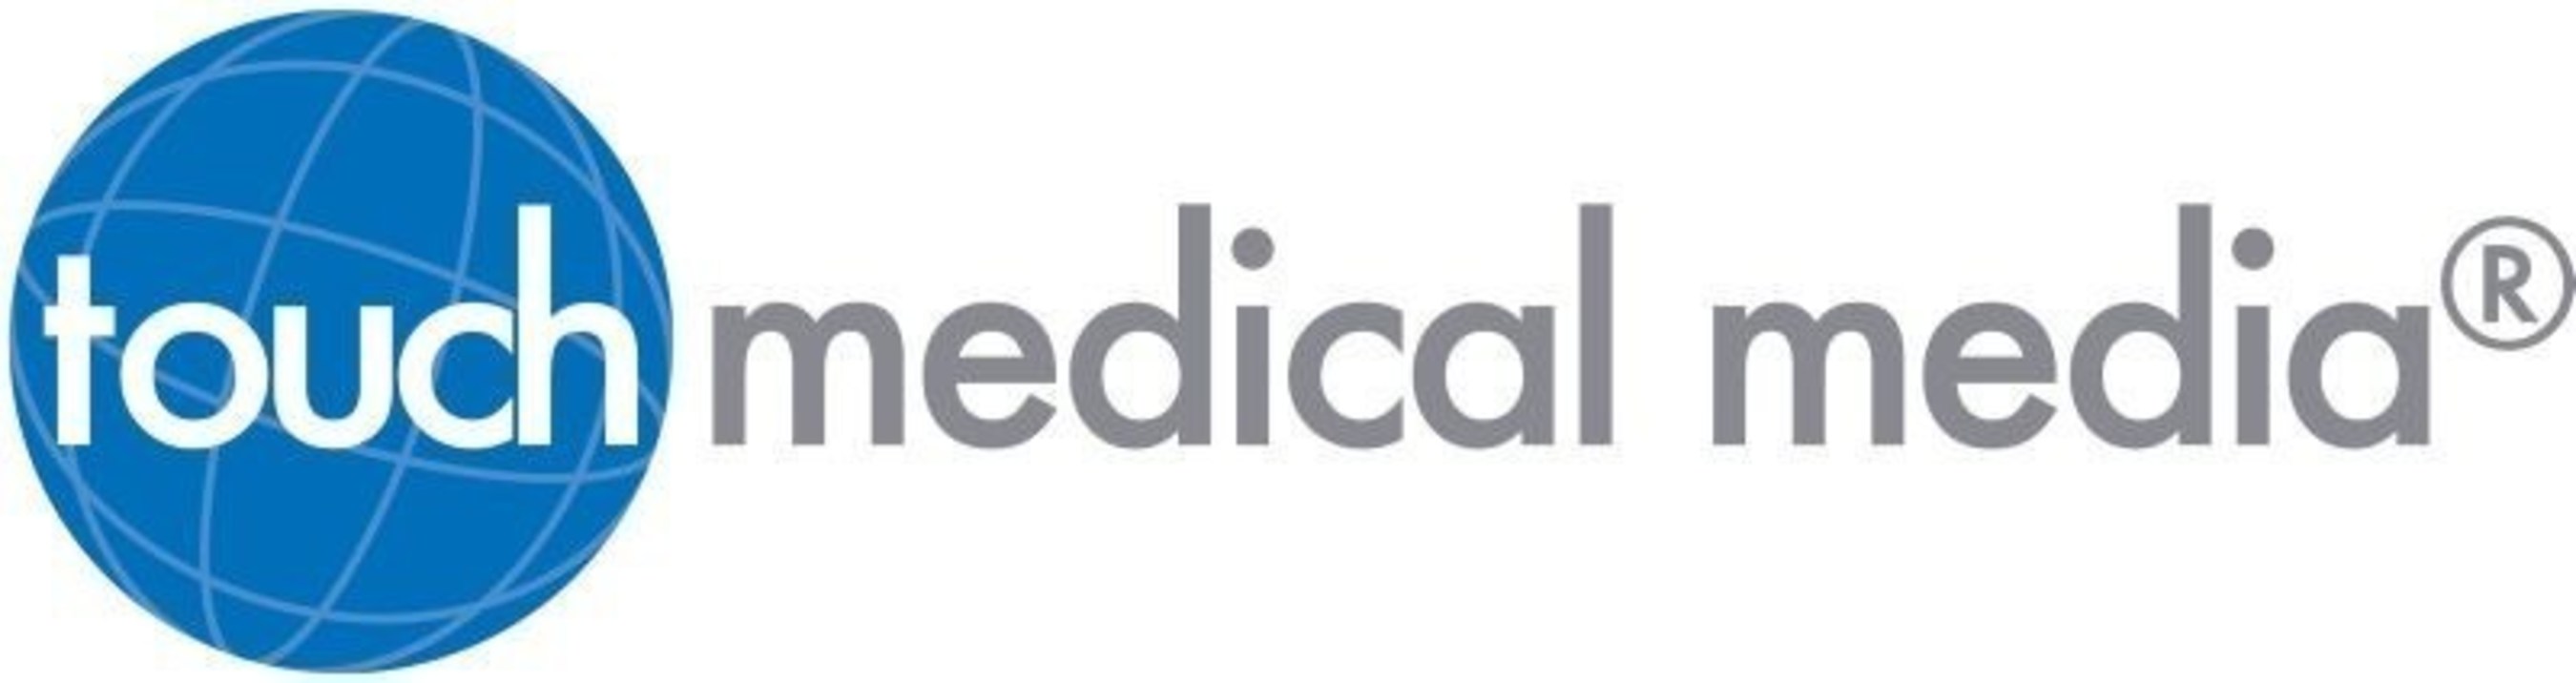 Touch Medical Media Logo (PRNewsFoto/Touch Medical Media) (PRNewsFoto/Touch Medical Media)